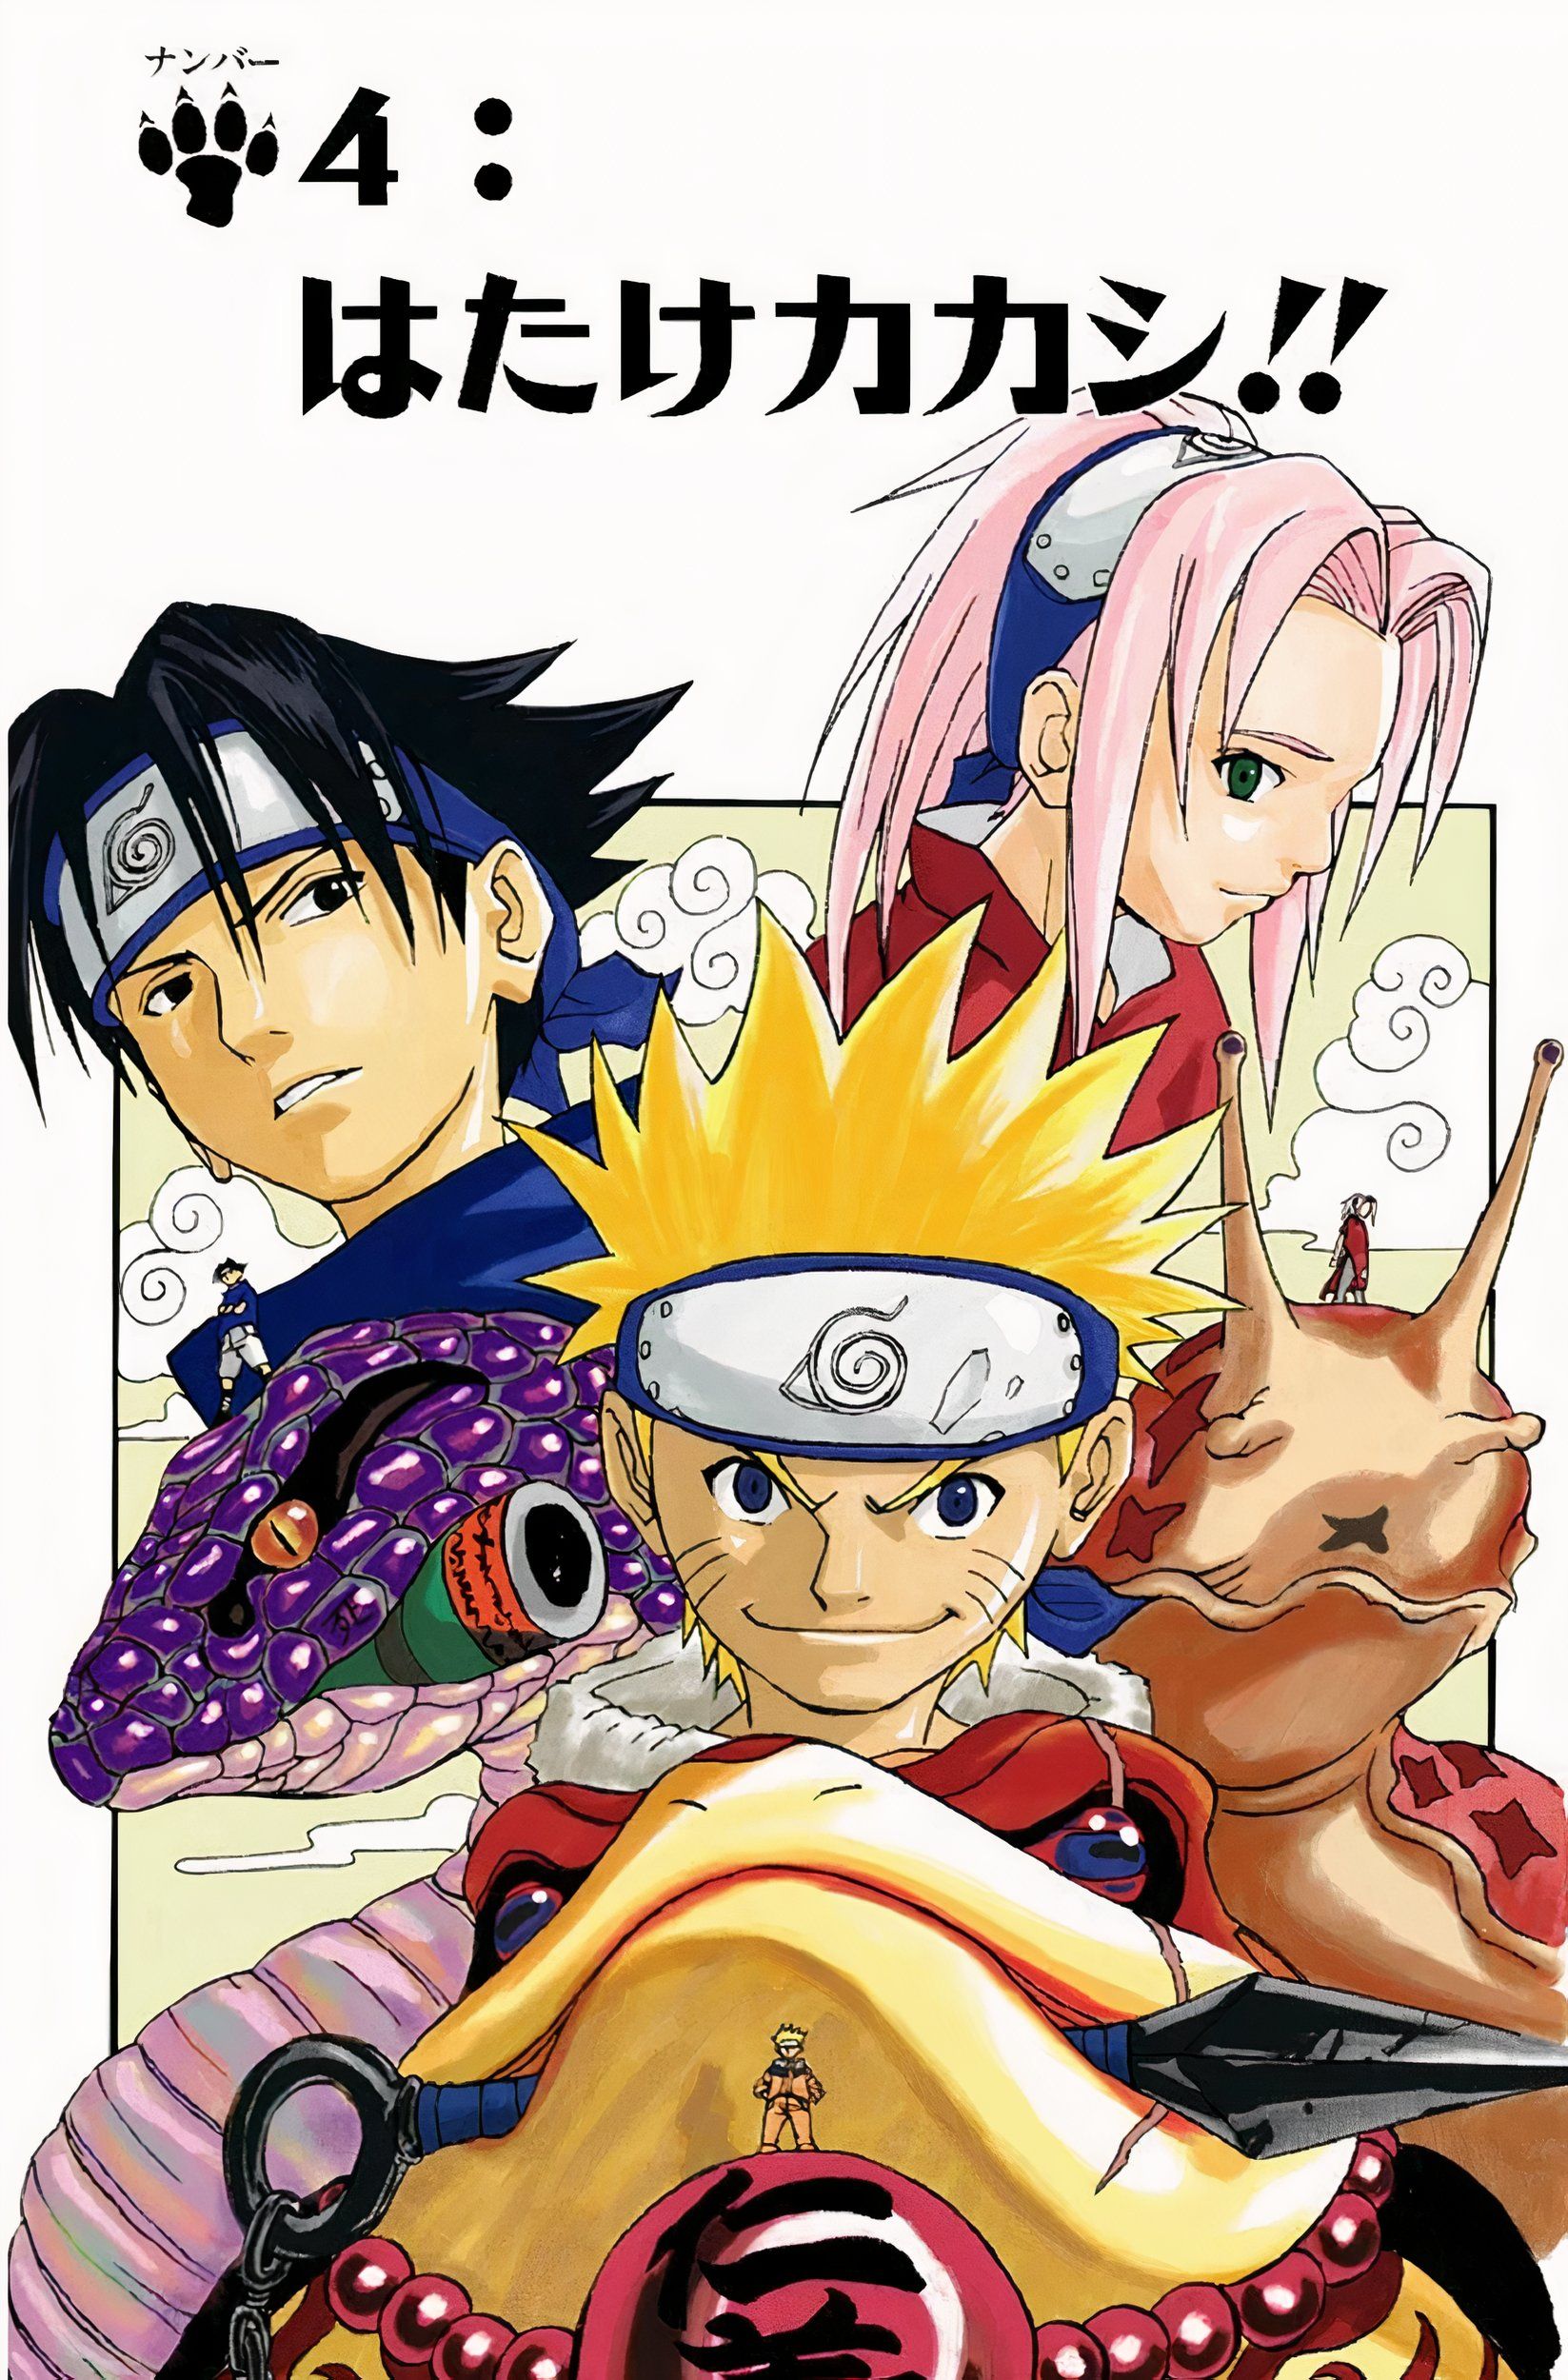 Naruto chapter 4 cover of Naruto, Sasuke and Sakura